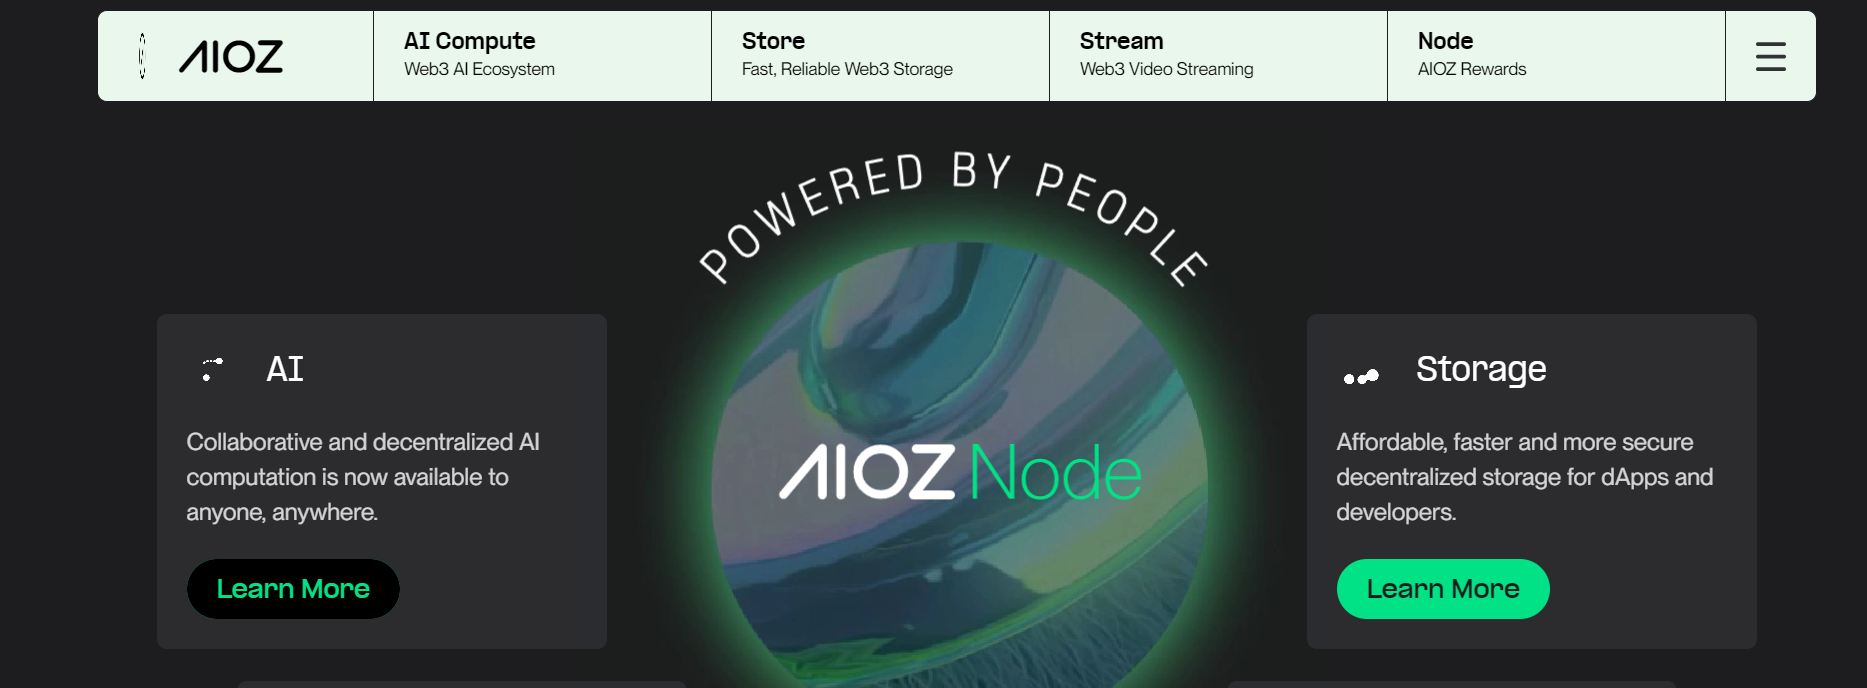 AIOZ Network